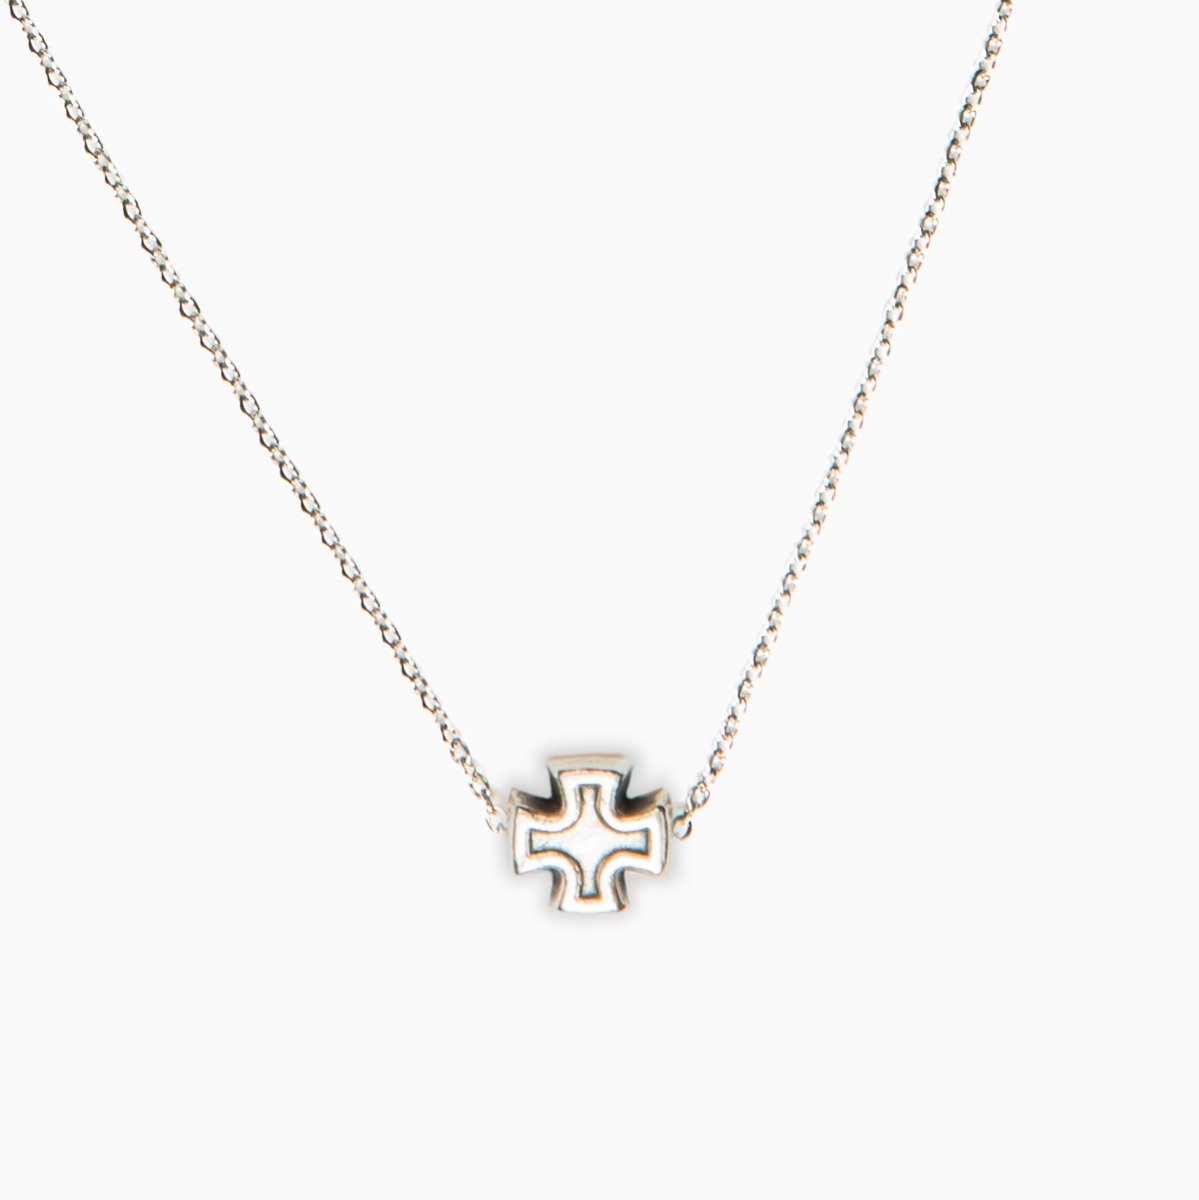 Faith Petite Cross Necklace